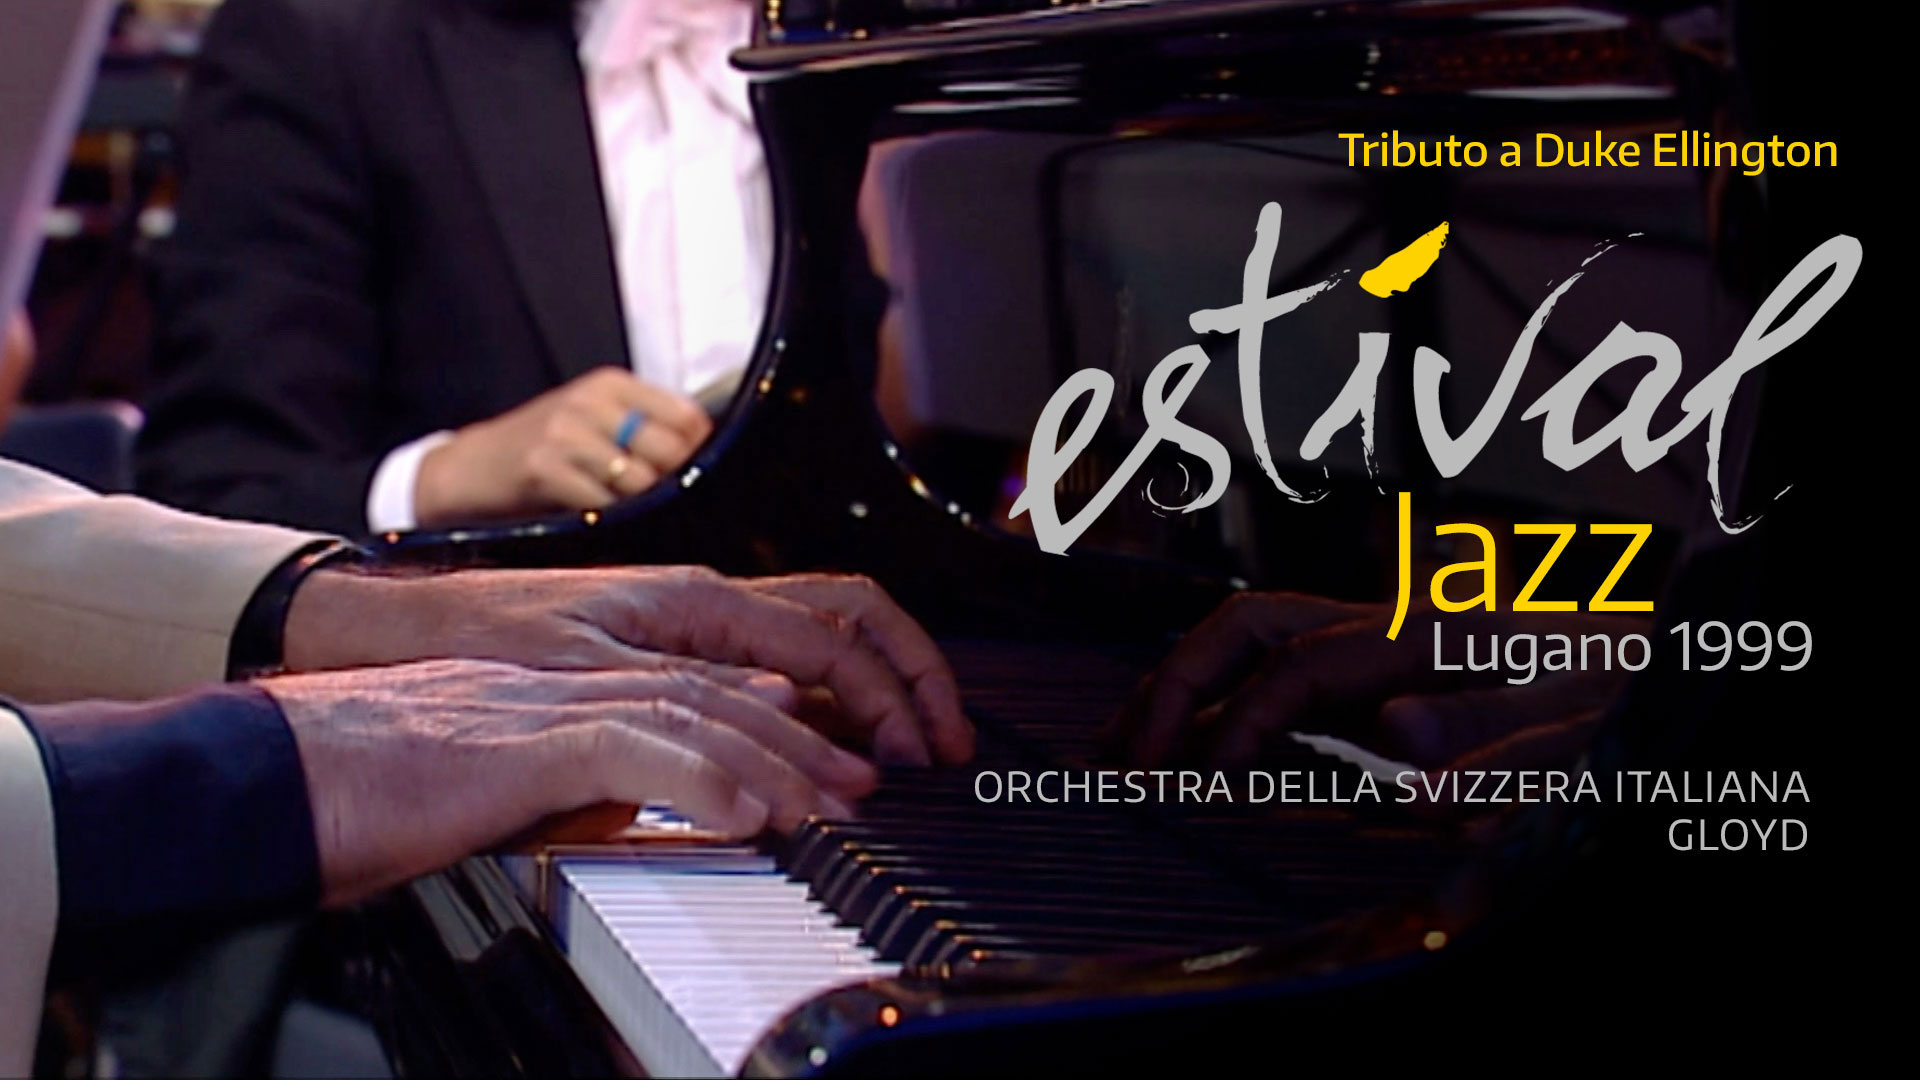 Poster Estival Jazz Lugano 1999 - Orchestra della Svizzera Italiana, Gloyd, Makovicz